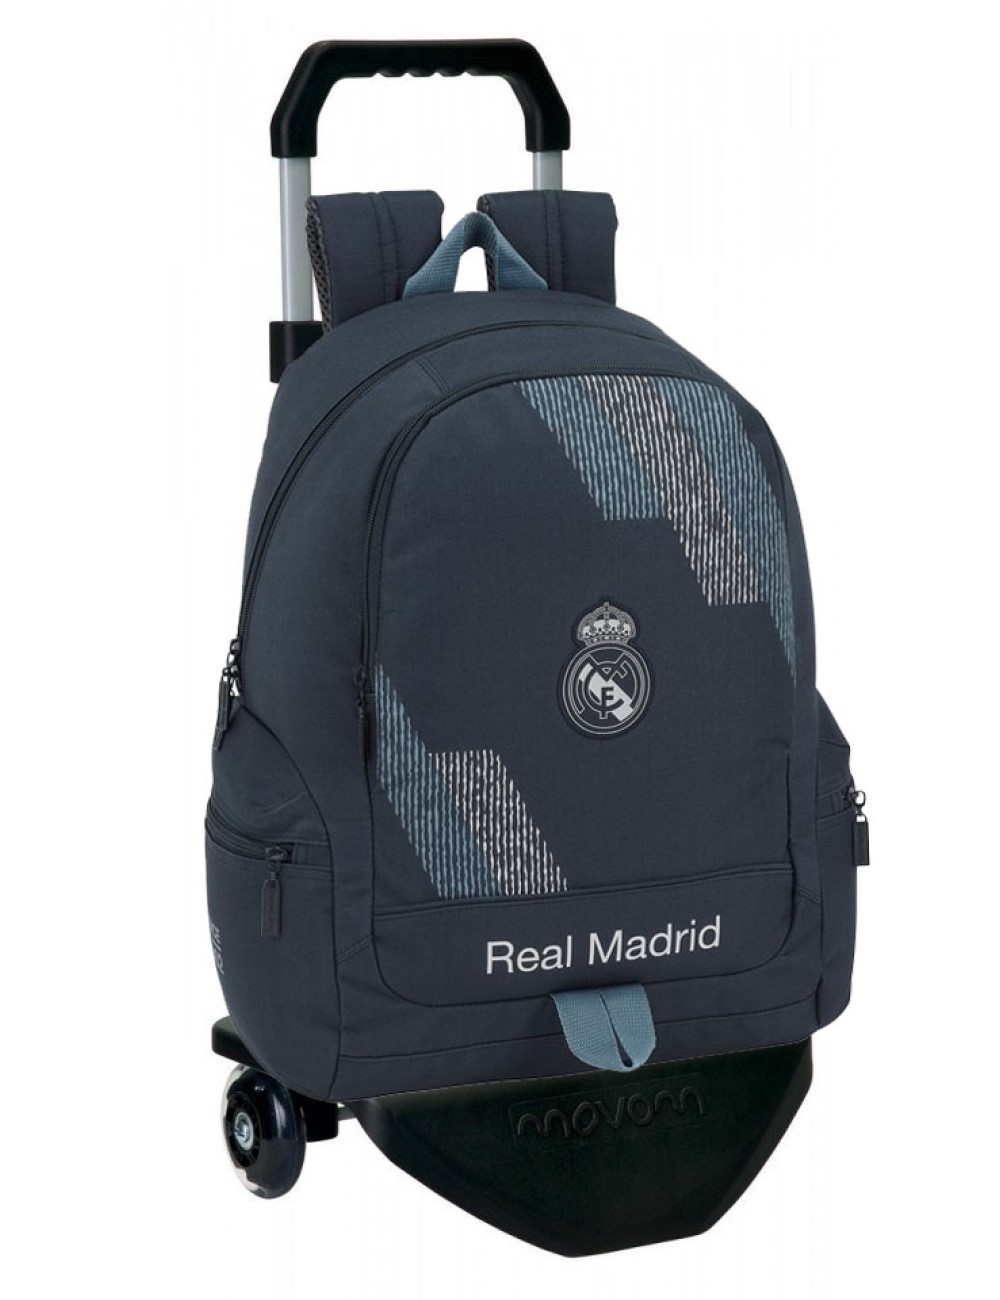 611834662C Mochila Real Madrid, Dark Grey, con Carro Negro Premium